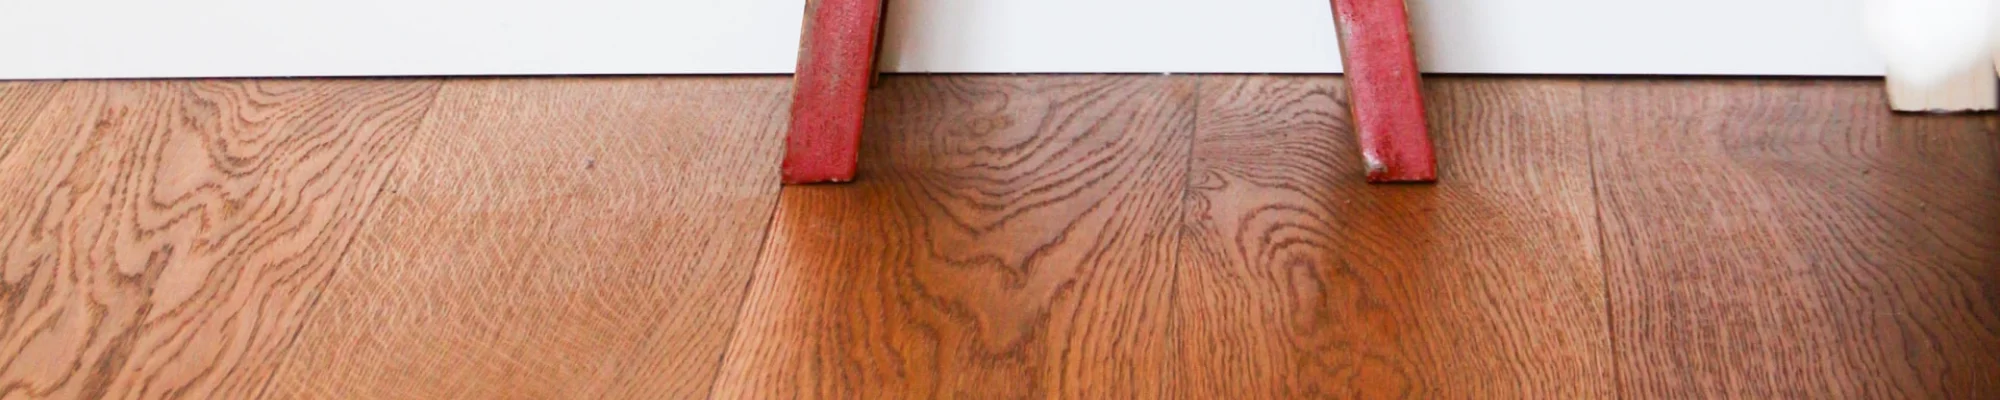 Hardwood flooring info provided by Capital Carpet LLC in the Washington, DC area